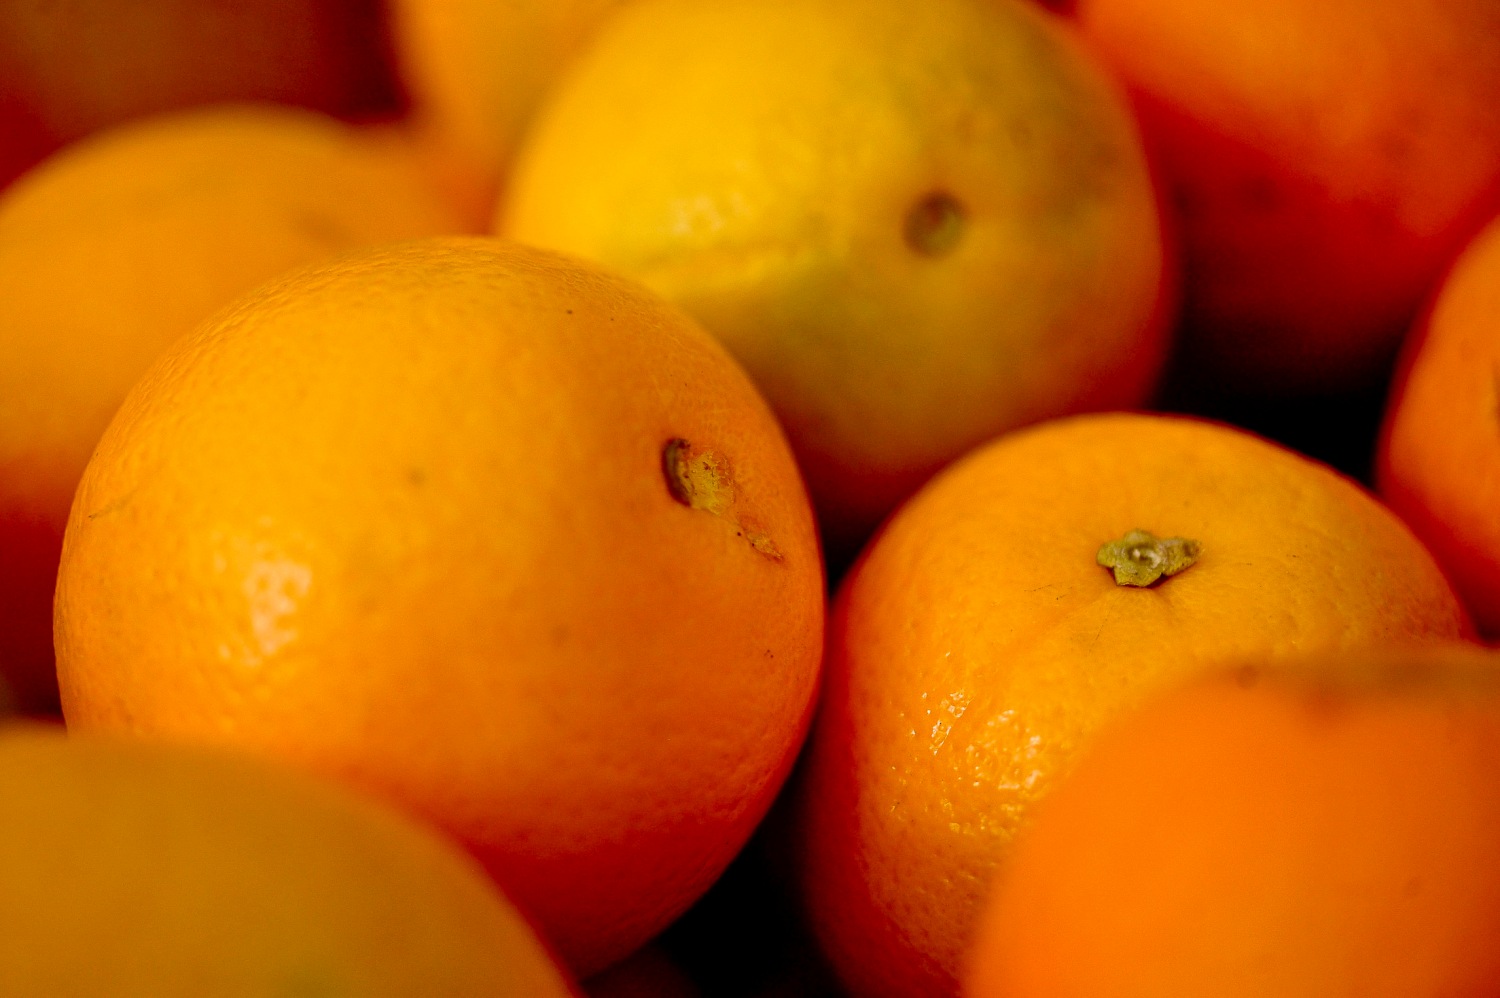 Resíduo da laranja é reaproveitado para auxiliar atividade larvicida. Foto: Elza Fiuza/Agência Brasil